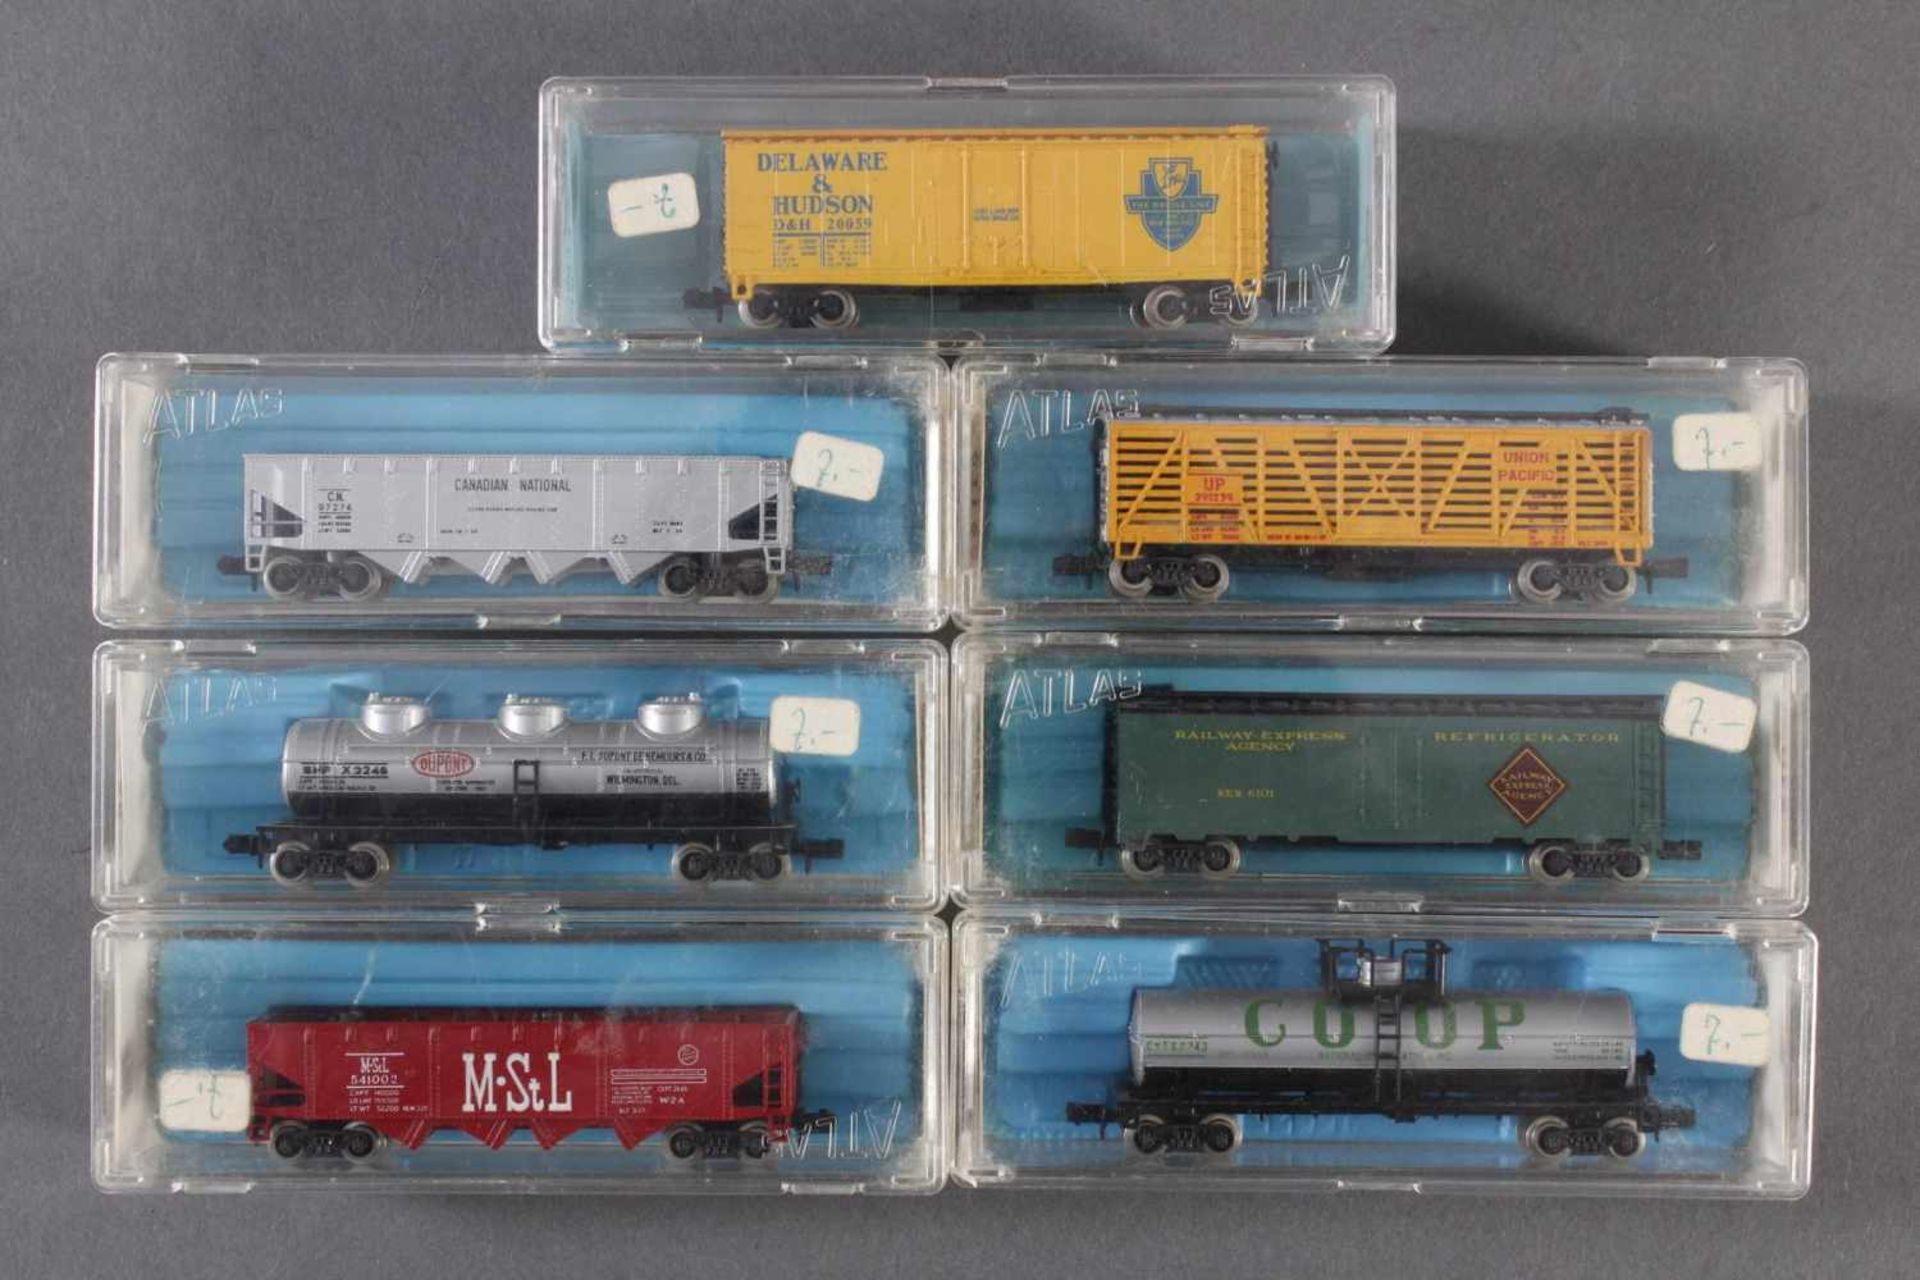 7 Atlas Güterwaggons, MinitrixModellnummer 2268, 2393, 2423, 2411, 2295, 2422 und 3310